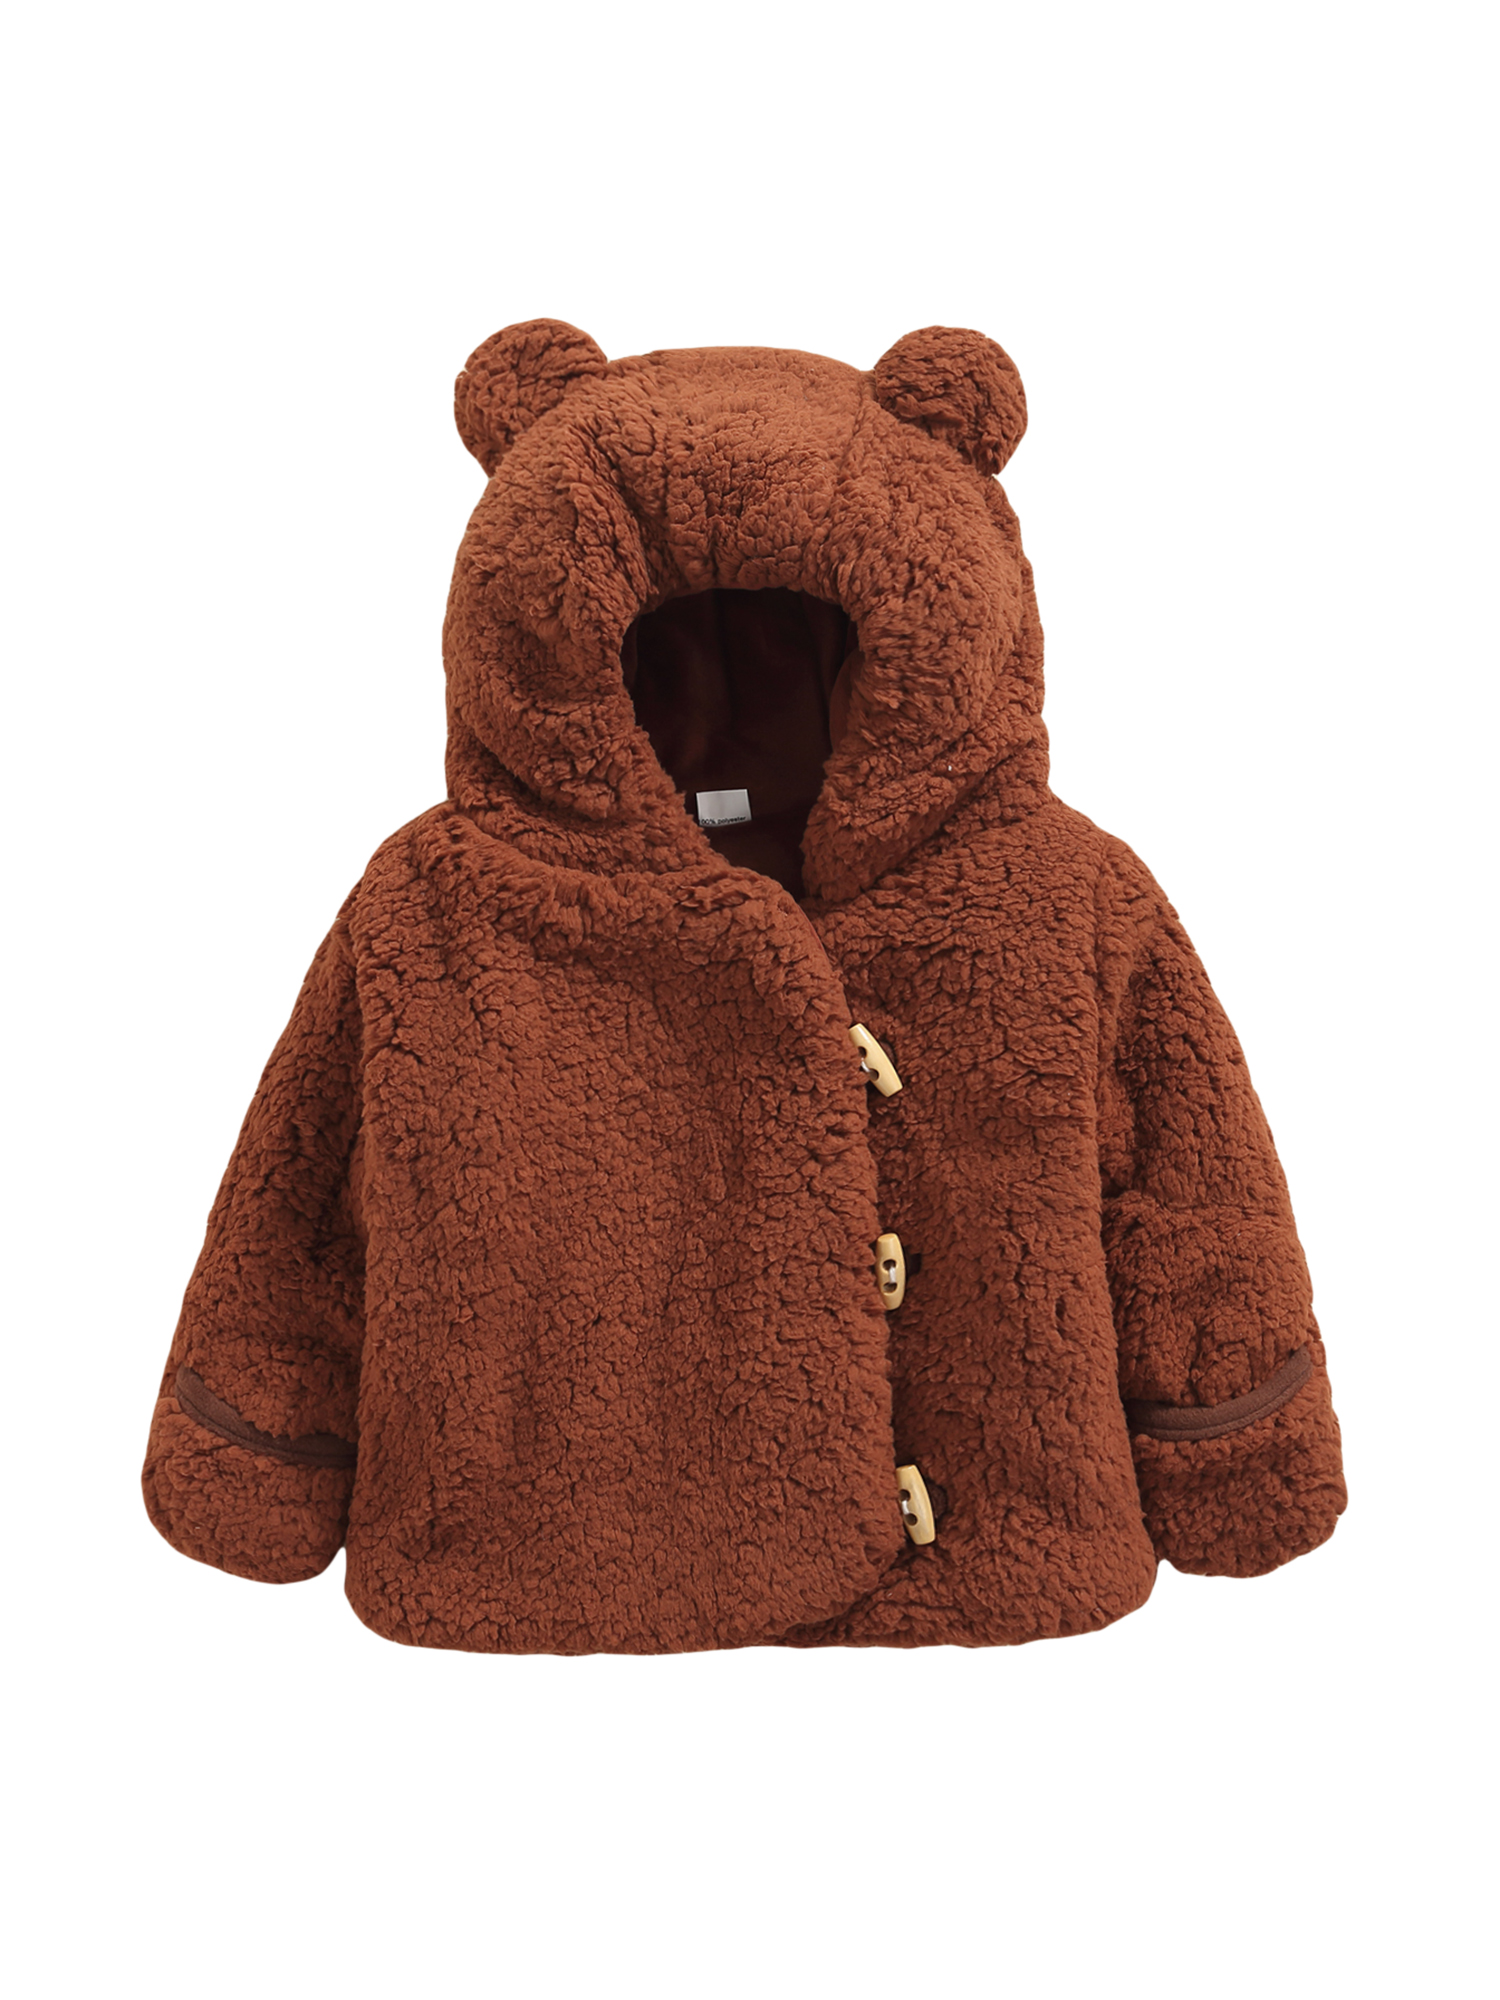 aturustex Baby Boys Girls Fleece Jacket Bear Ear Hoodie Warm Winter Outwear Top - image 1 of 7